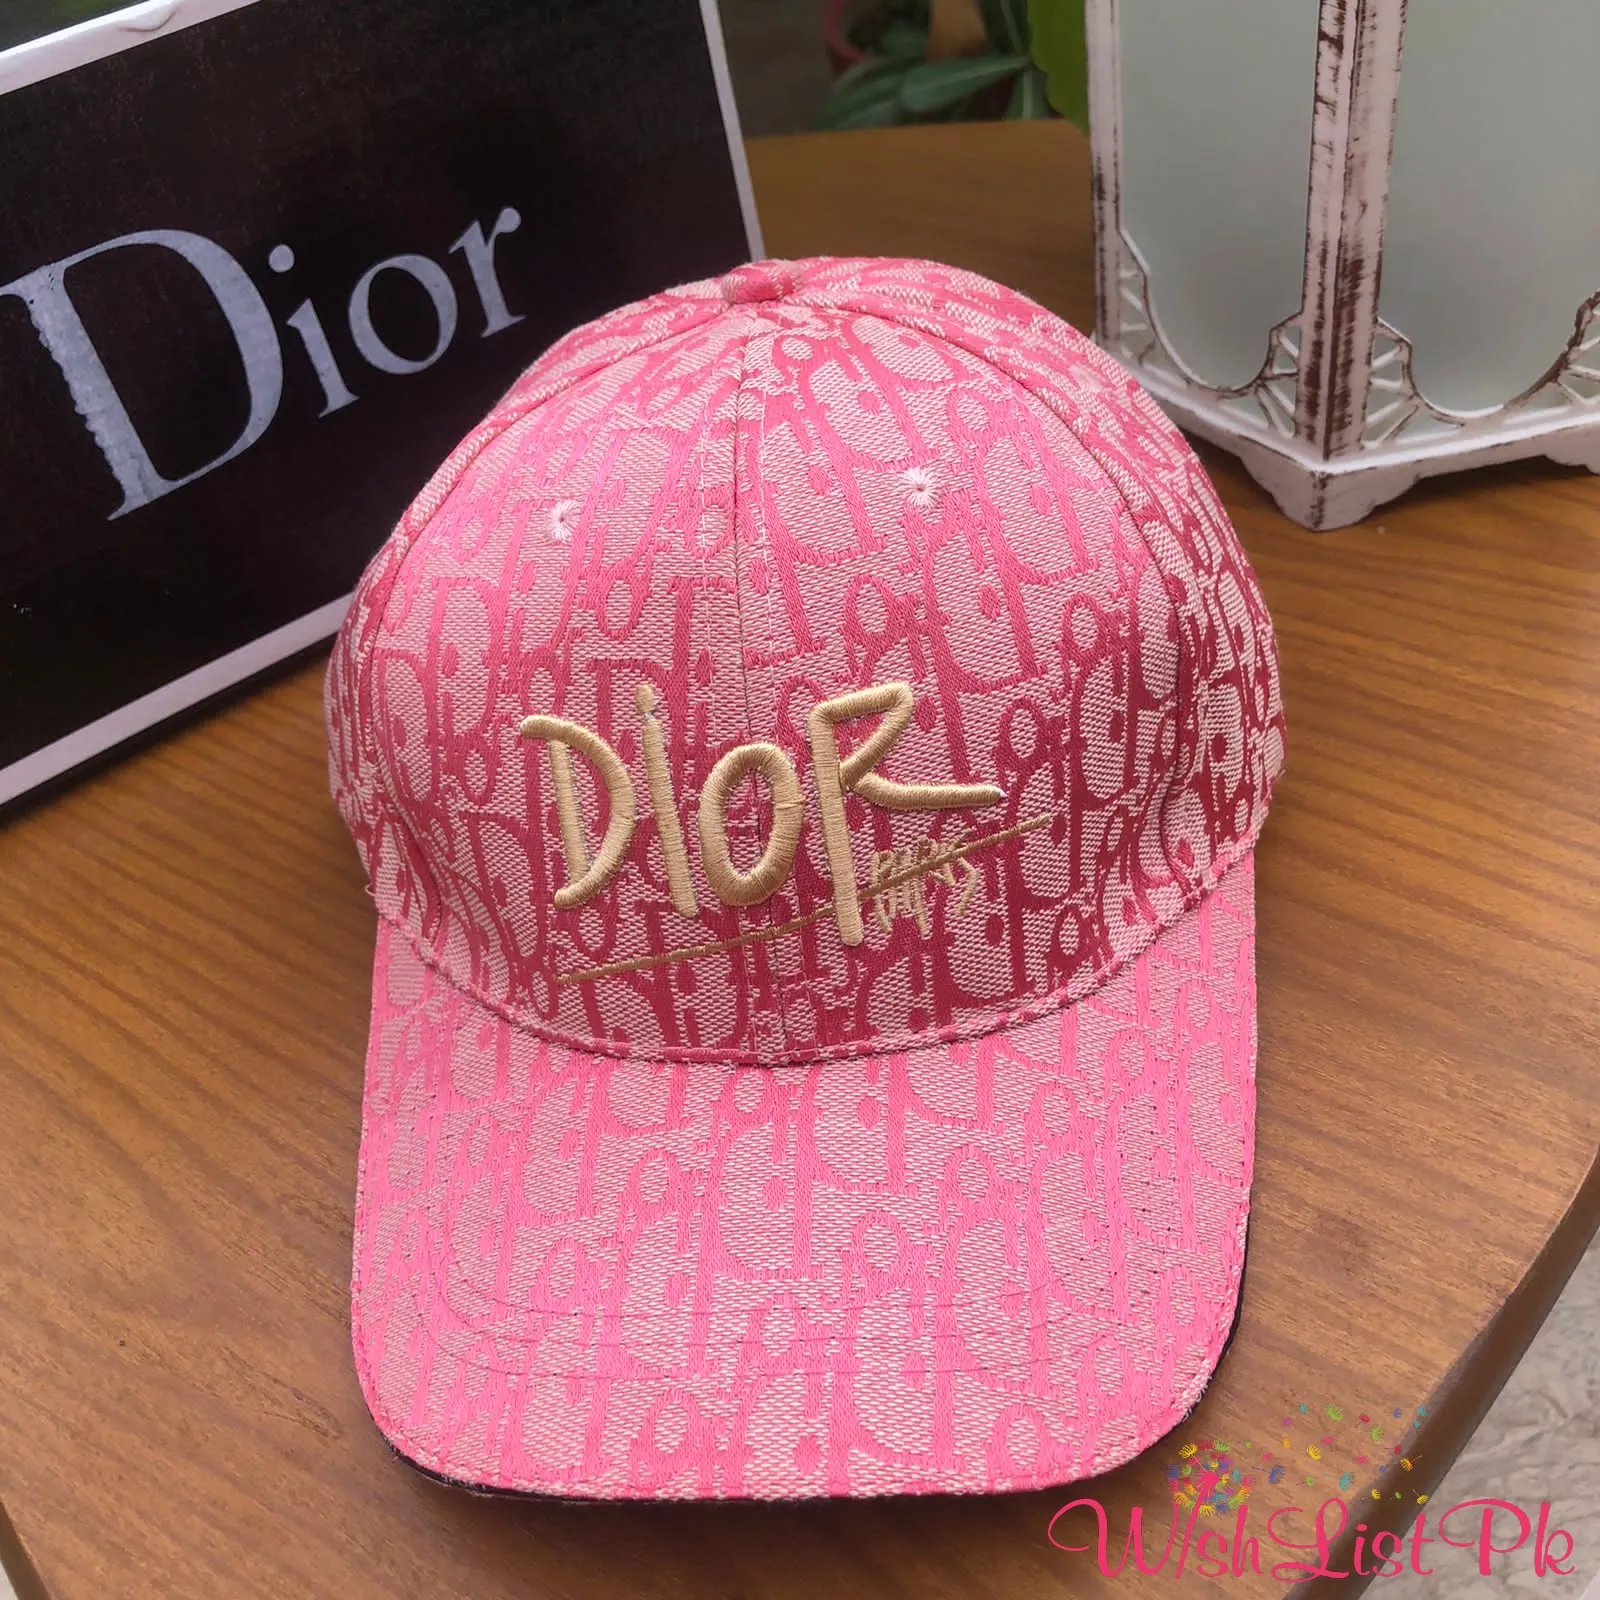 Best Price Dior Female Cap Pink 